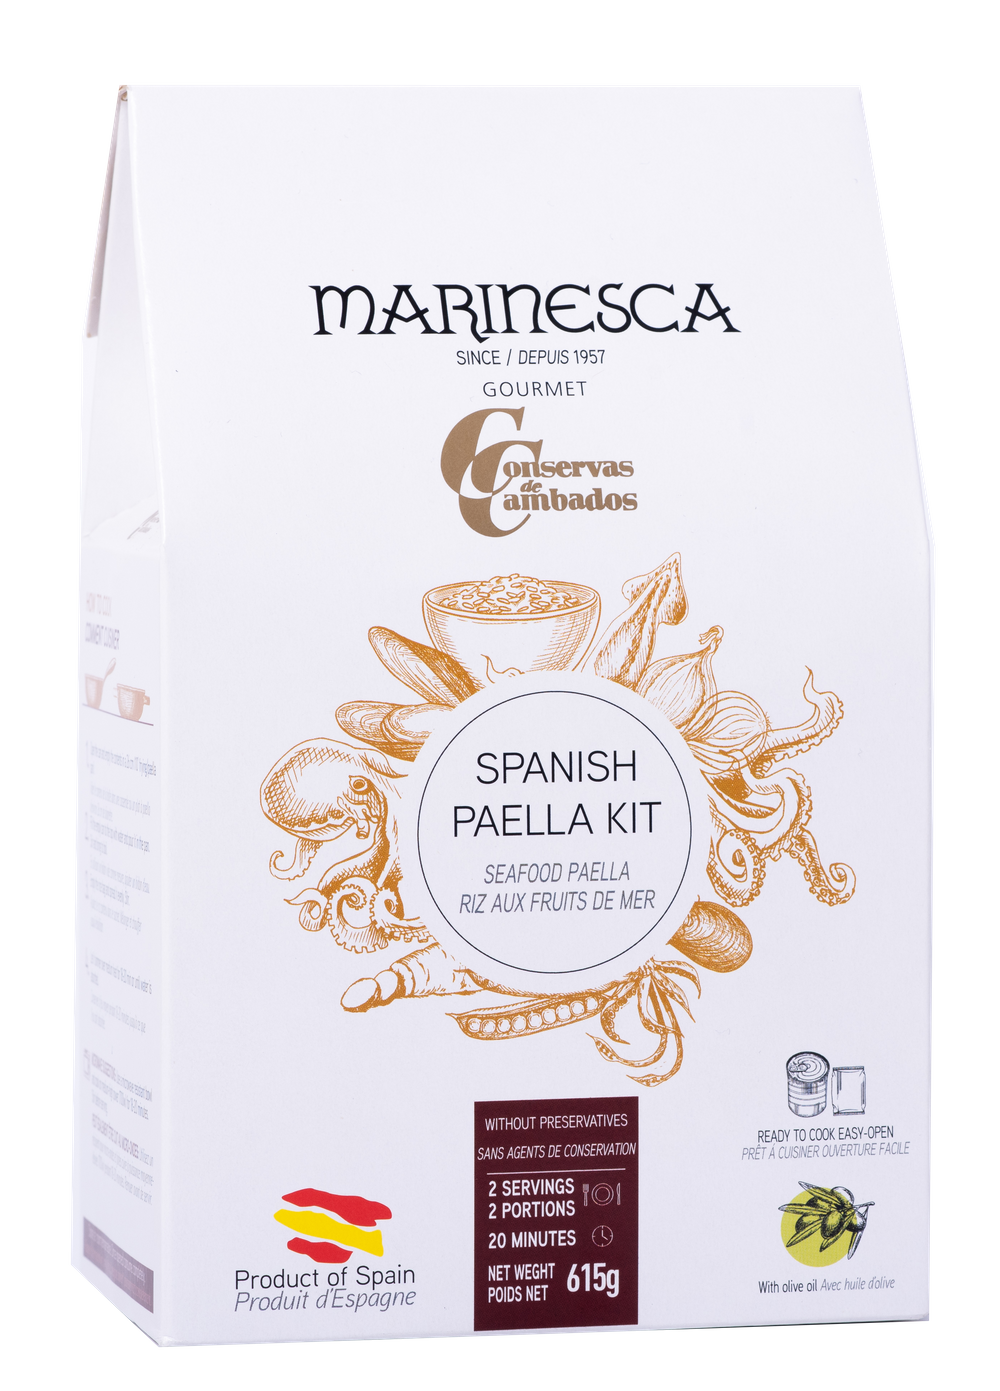 Spanish Gourmet Pantry and Paella Kit